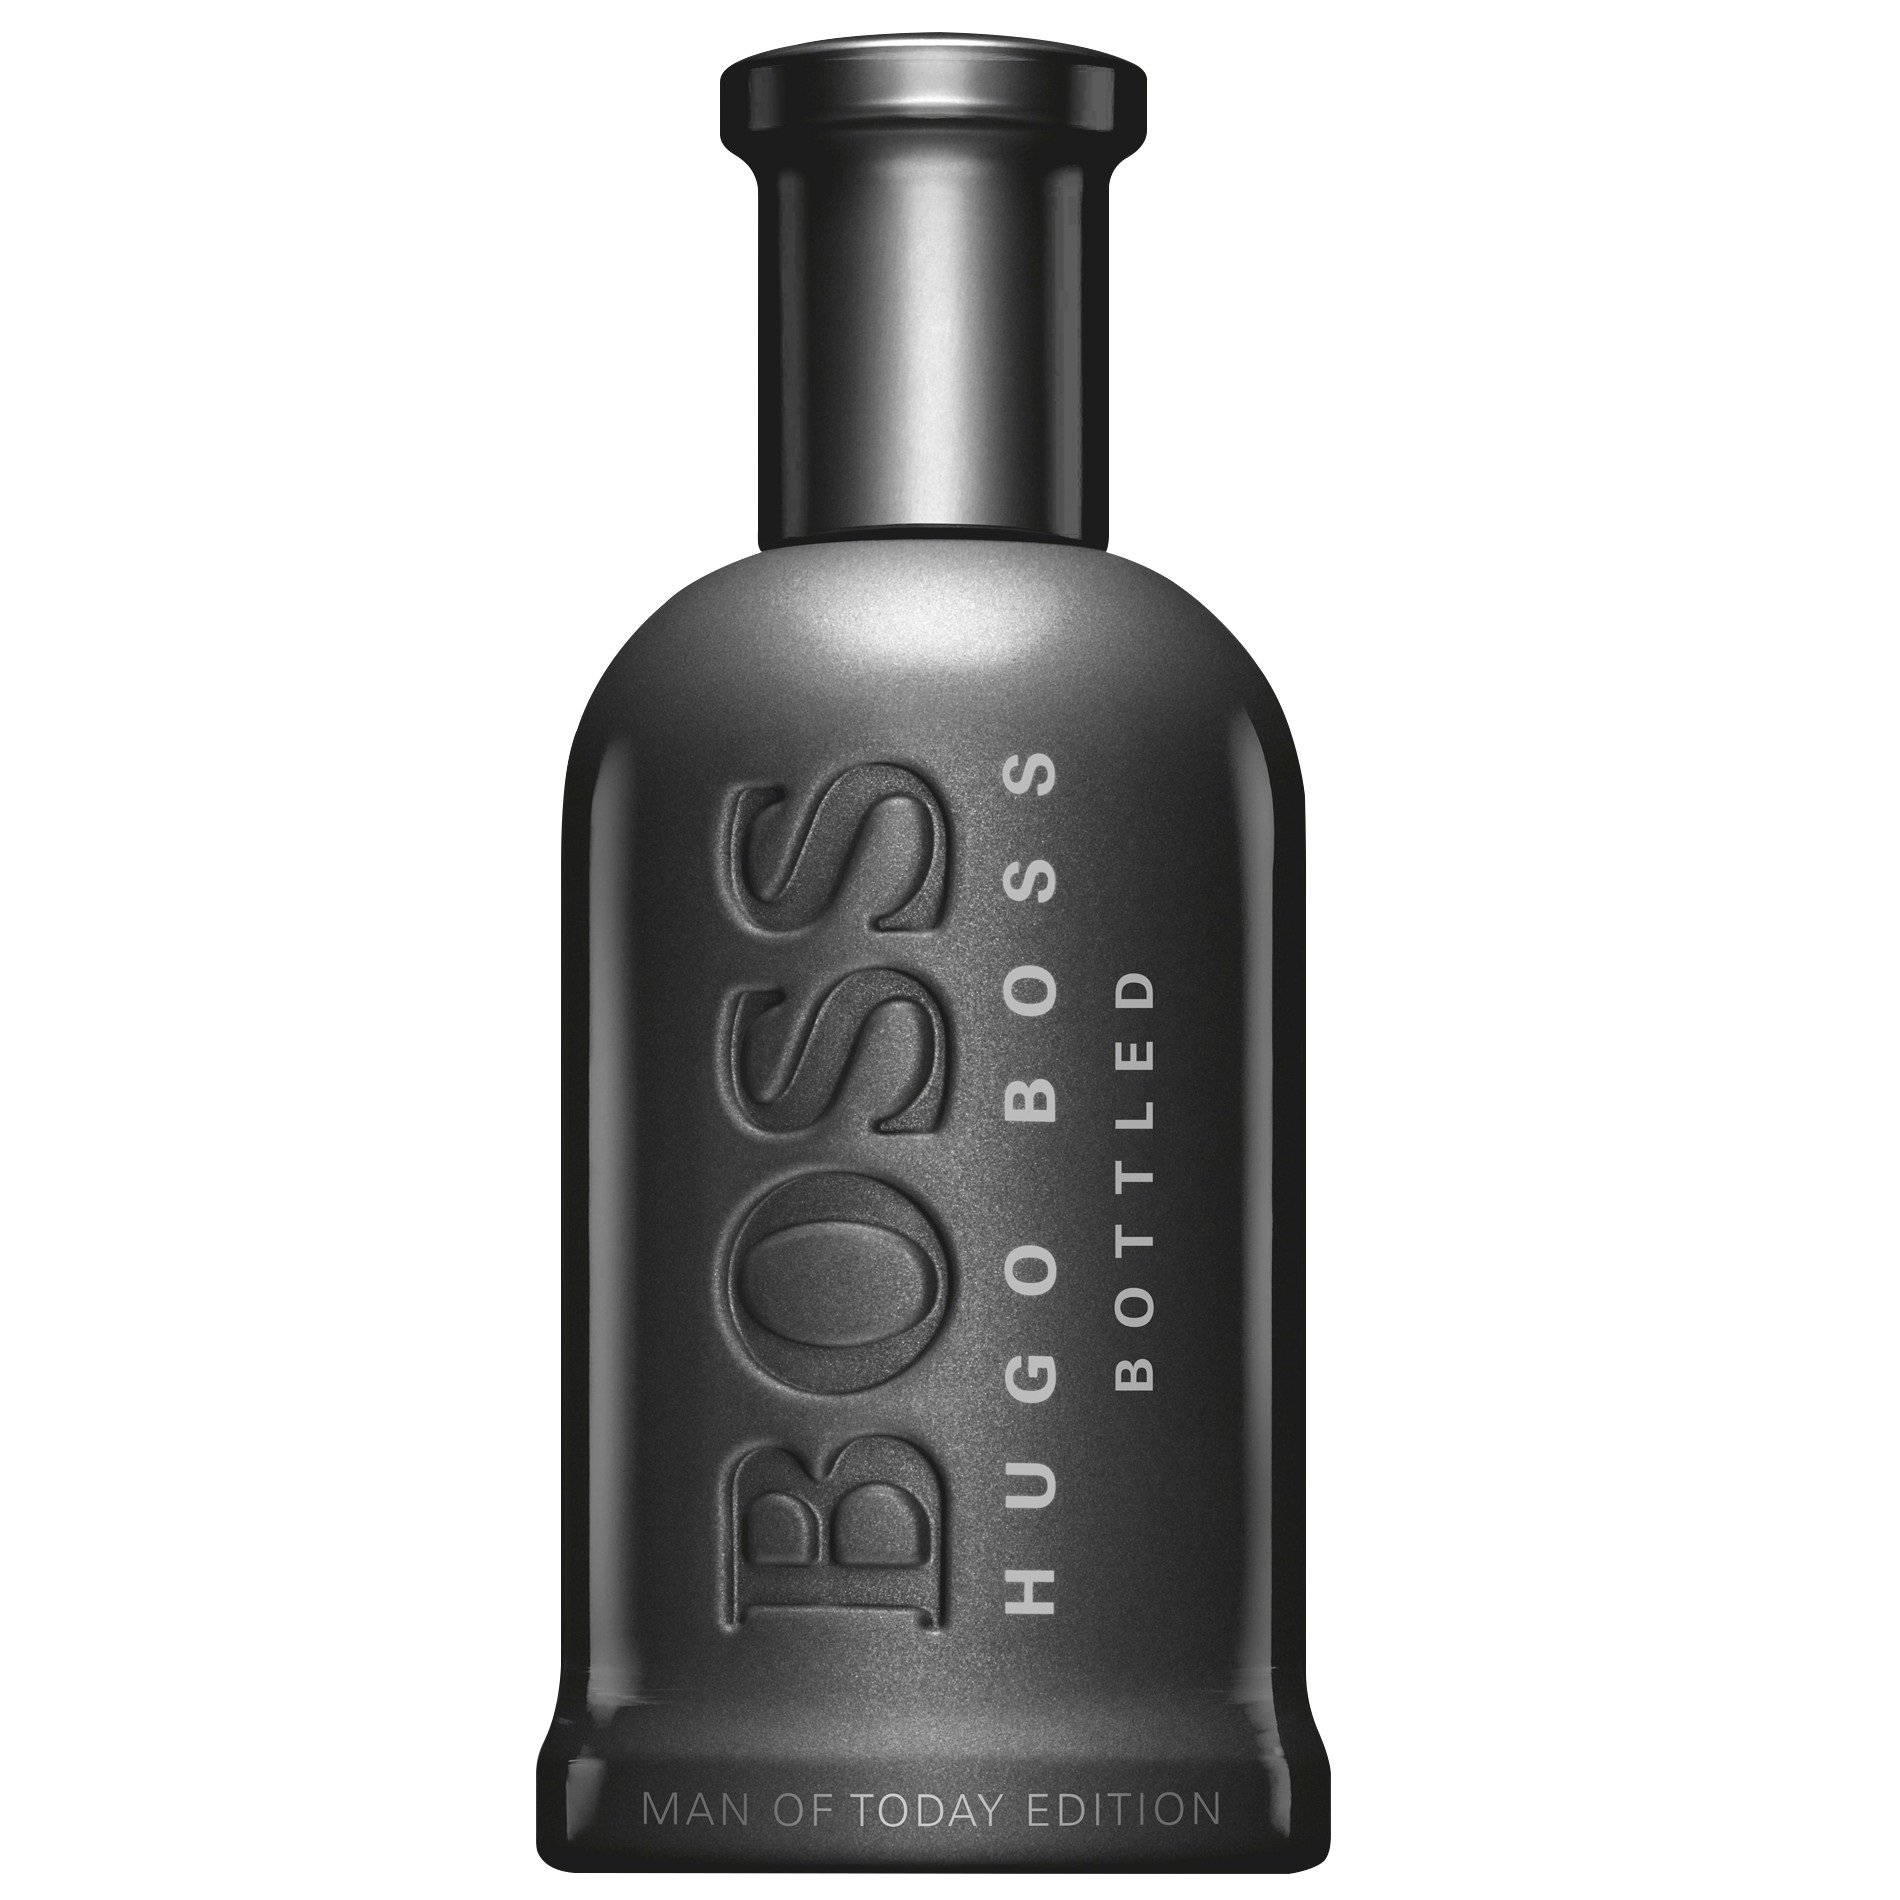 Хуго босс ботлед. Hugo Boss Boss Bottled Tonic [m] EDT - 100ml. Туалетная вода Hugo Boss "Boss Bottled men of today", 100 ml. Hugo Boss Bottled Collector's Edition. Hugo Boss Bottled EDP man 100ml.